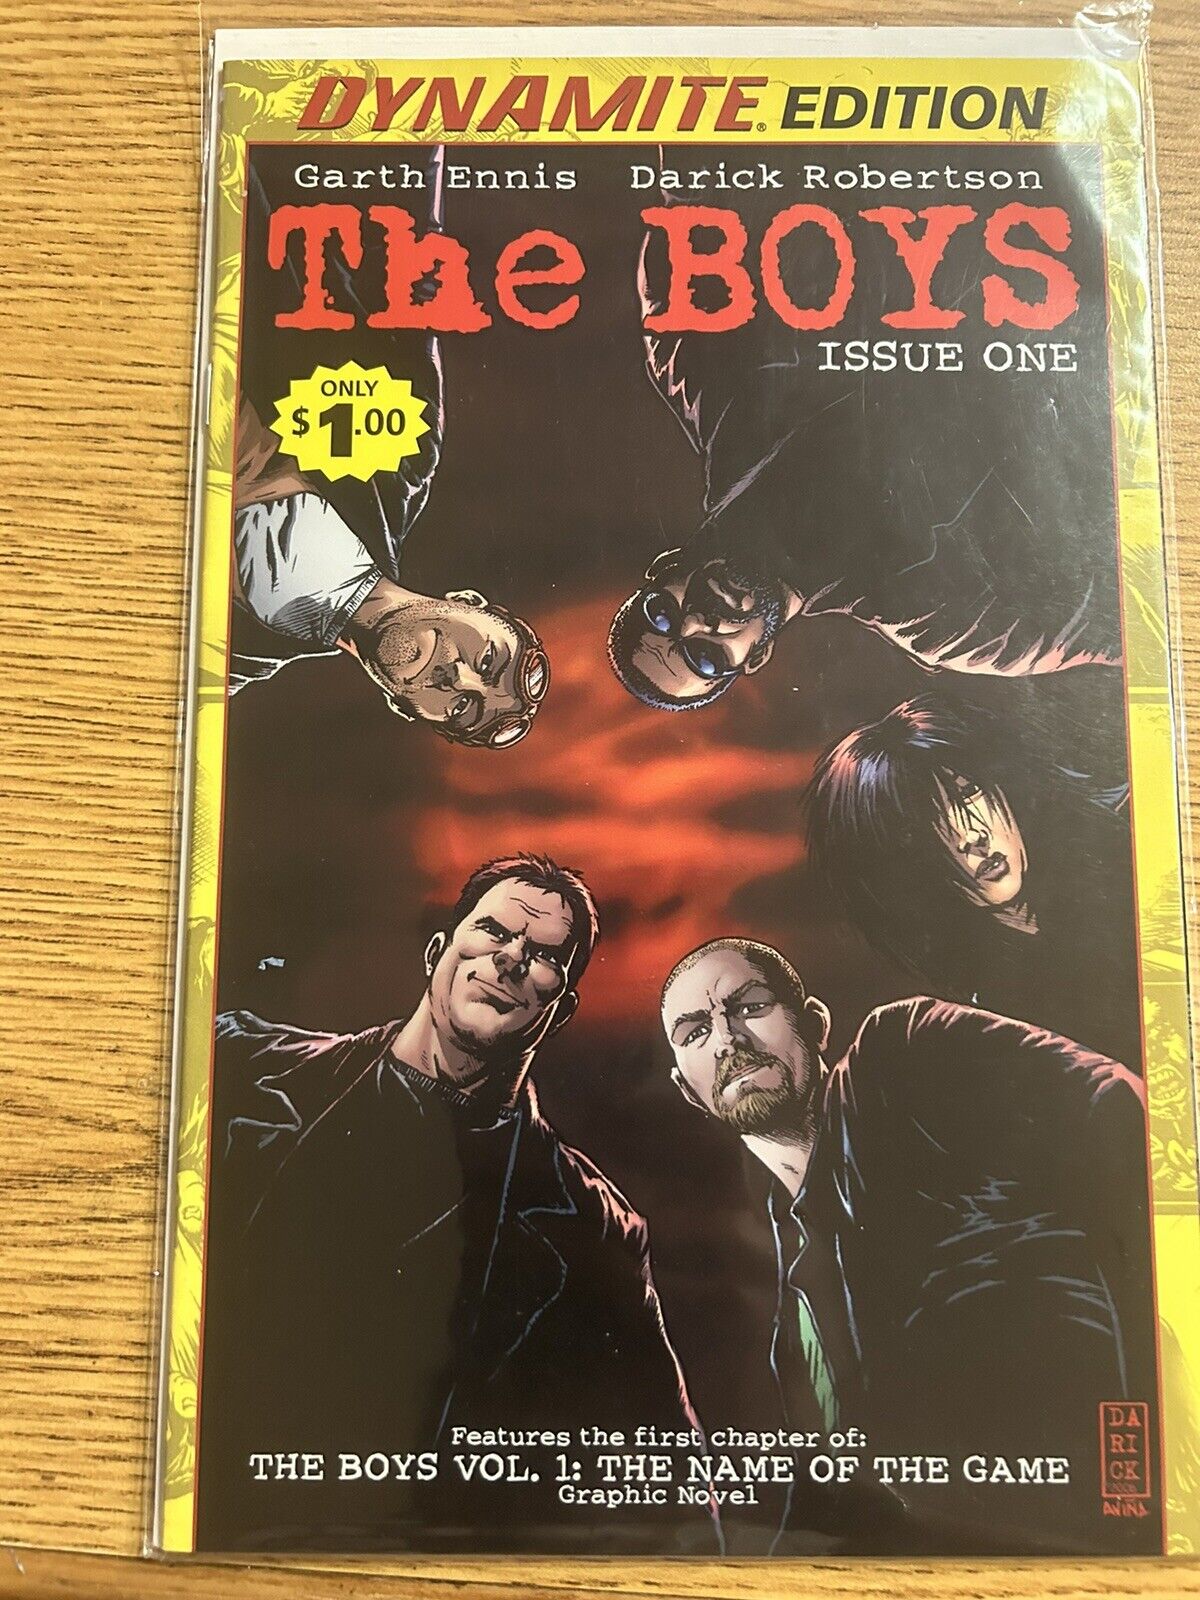 The Boys #1 (DC Comics October 2006)